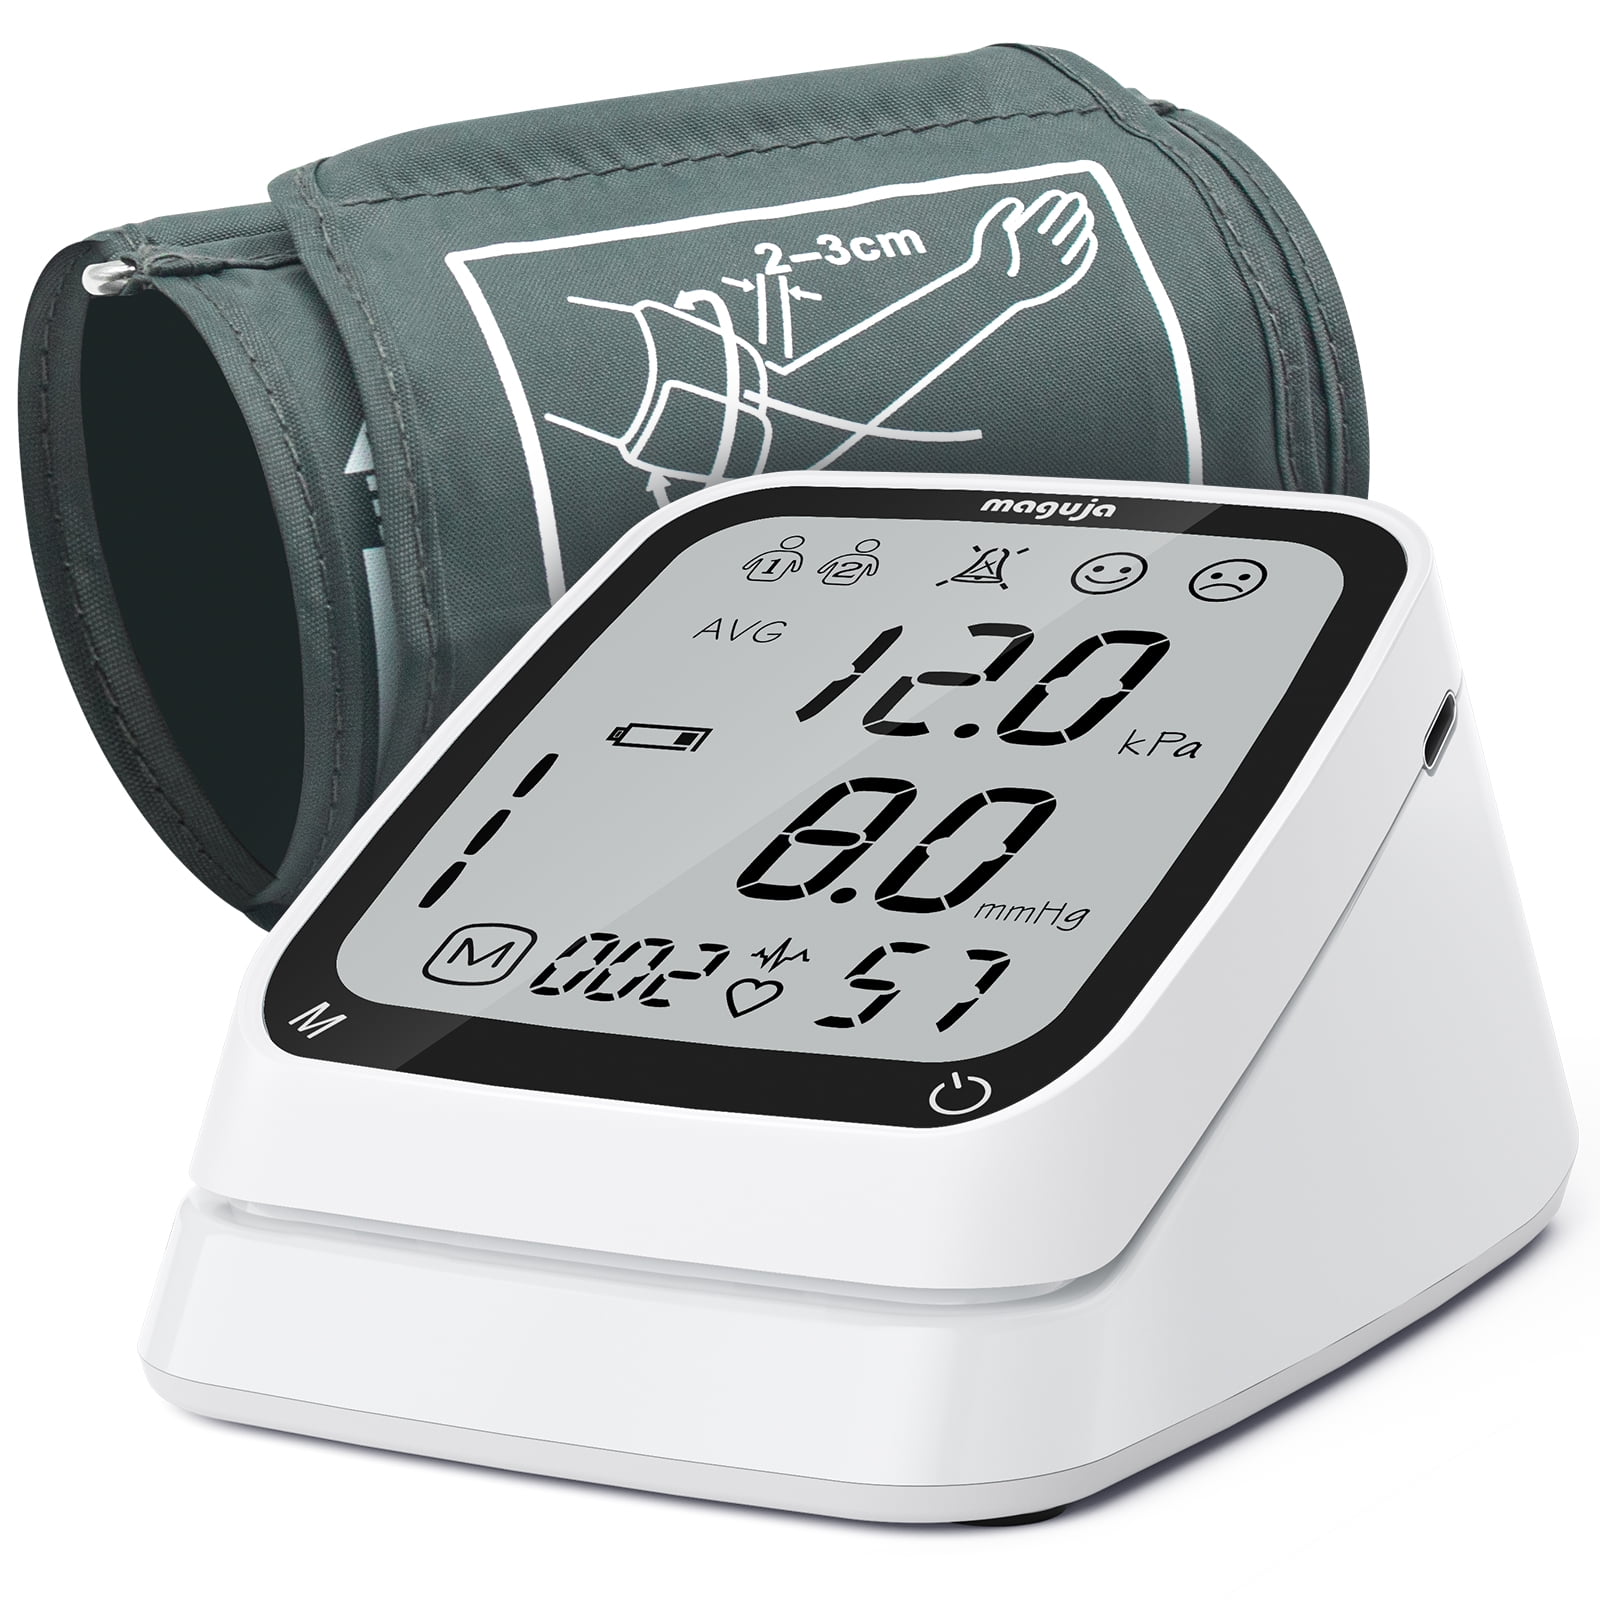 Tovendor Blood Pressure Monitor, Portable Automatic Digital BP Monitor  Irregular Heart Beat Detection with Large Display Screen Adjustable  5.3-8.5